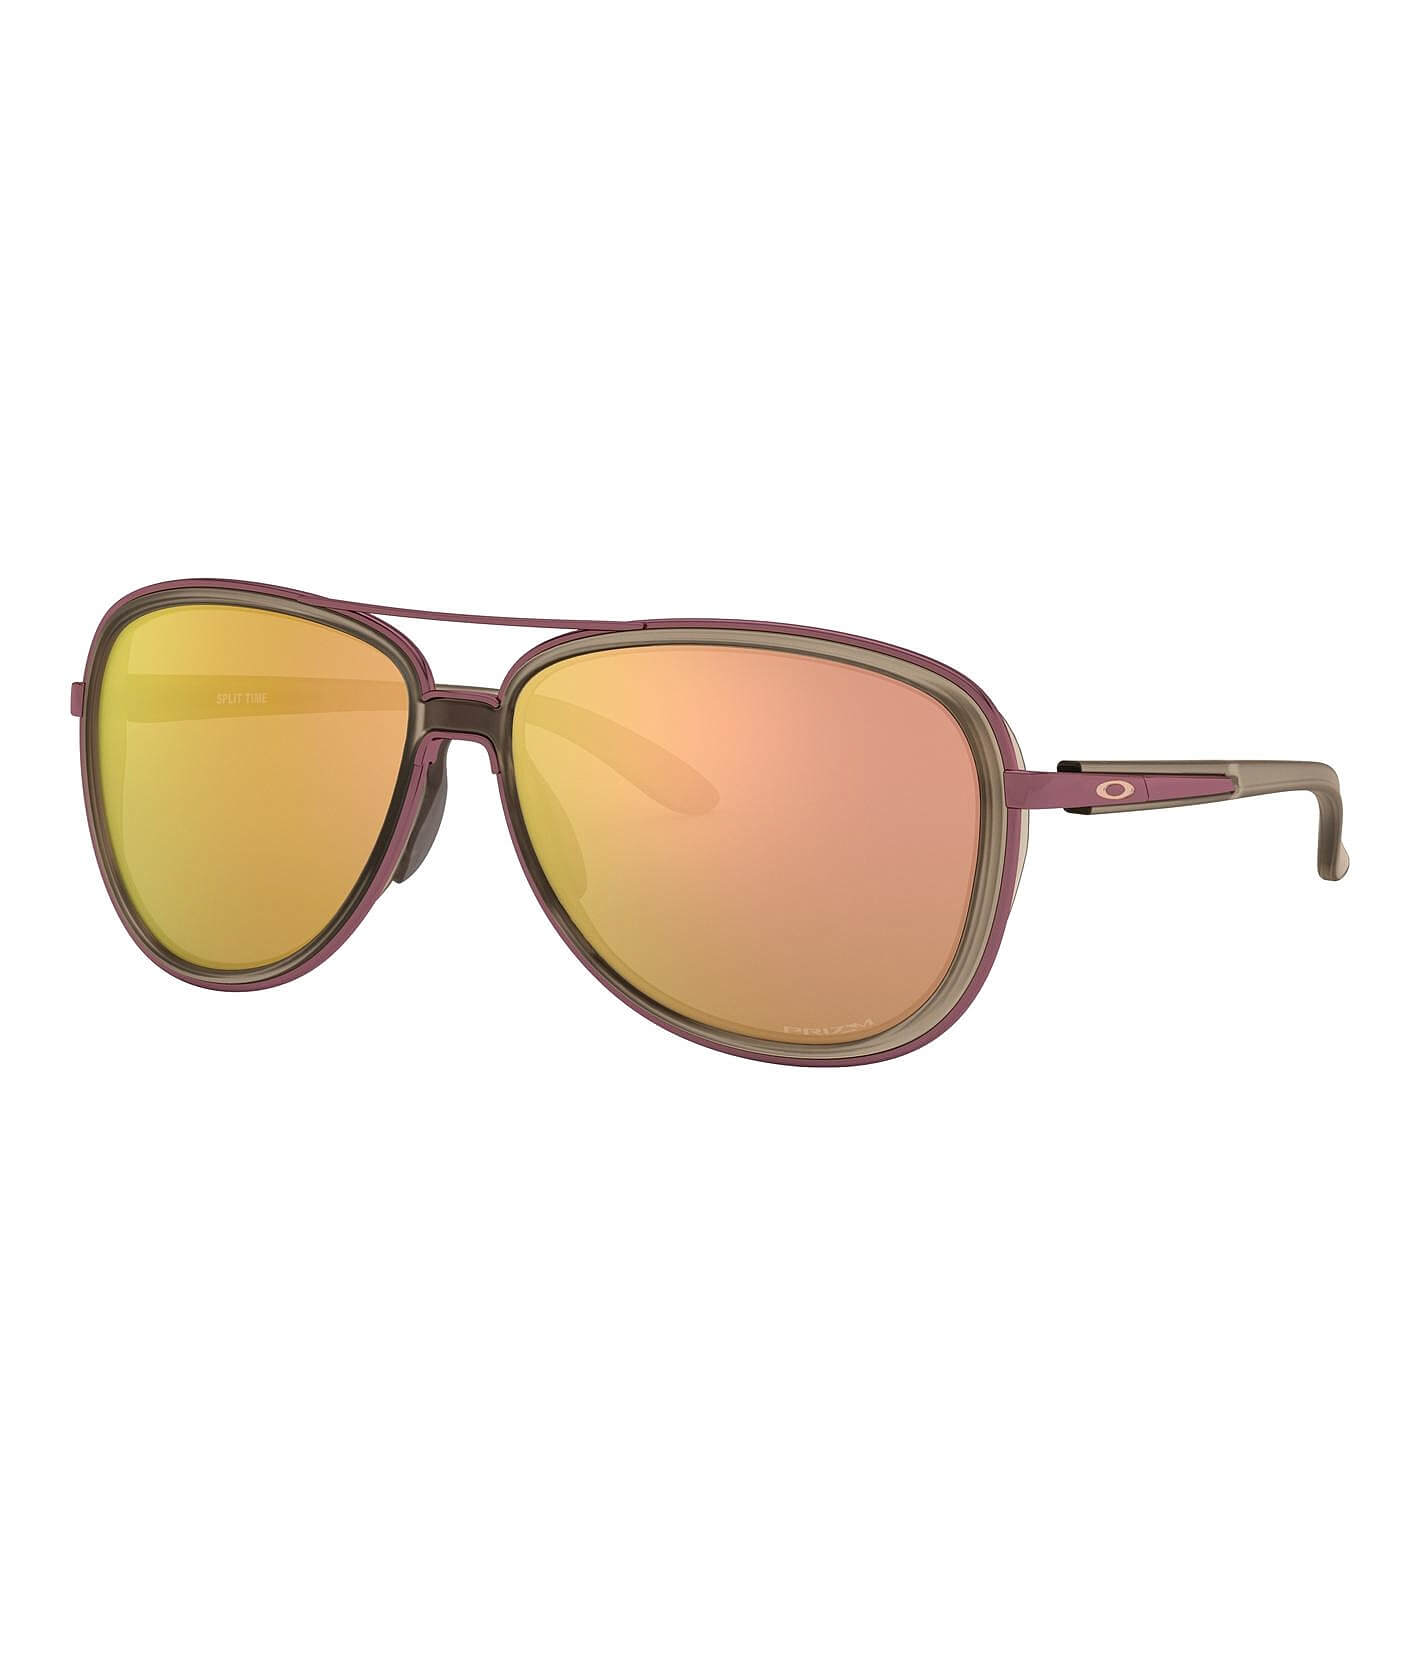 oakley women's aviator polarized sunglasses